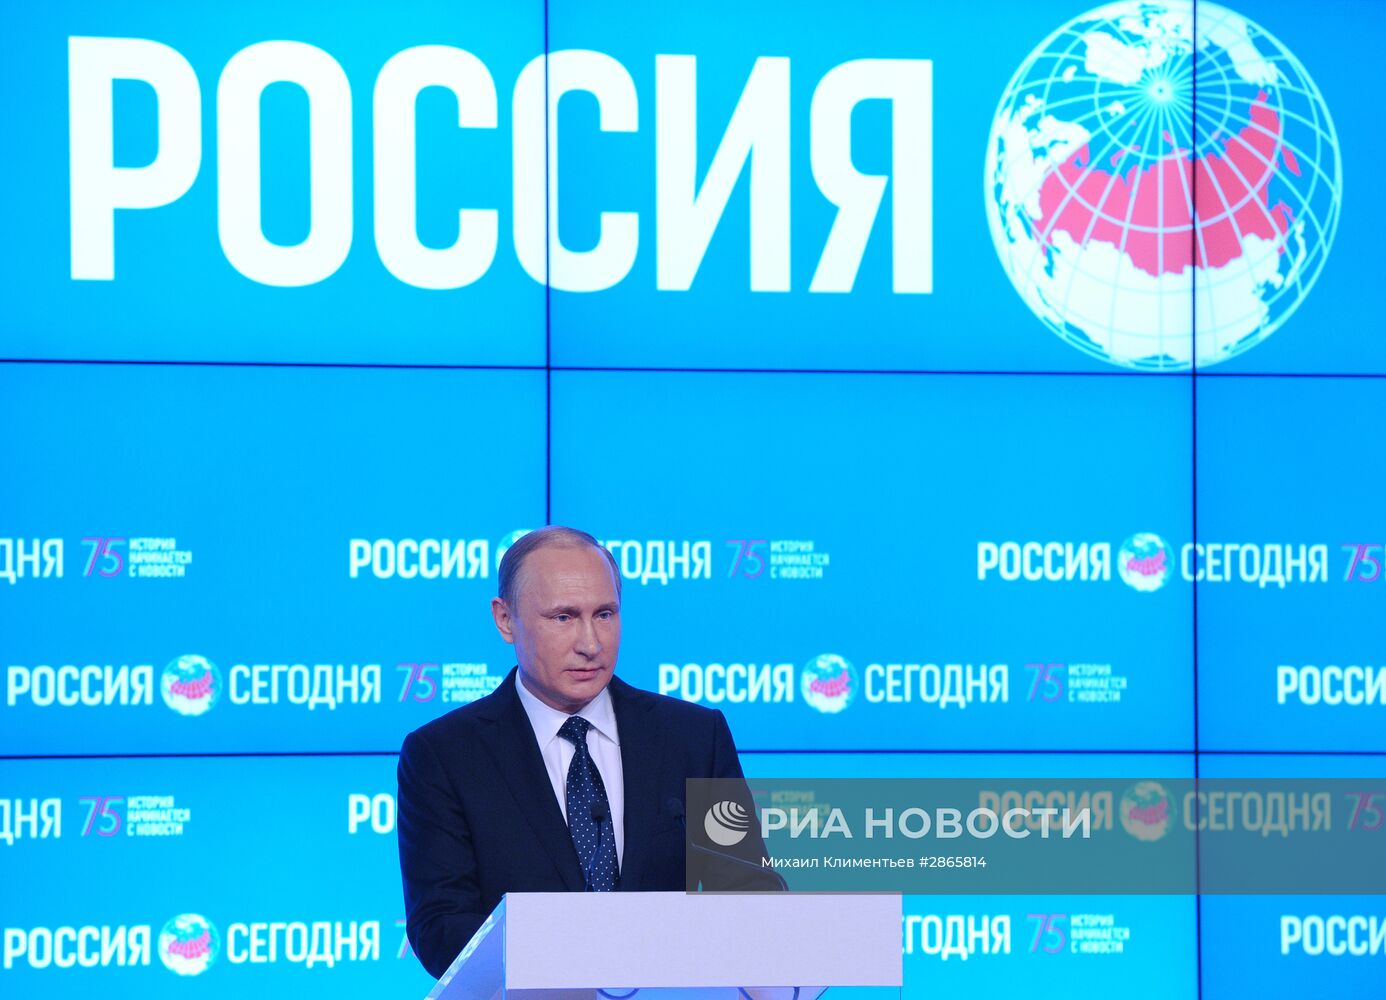 Президент РФ В. Путин посетил МИА "Россия сегодня"